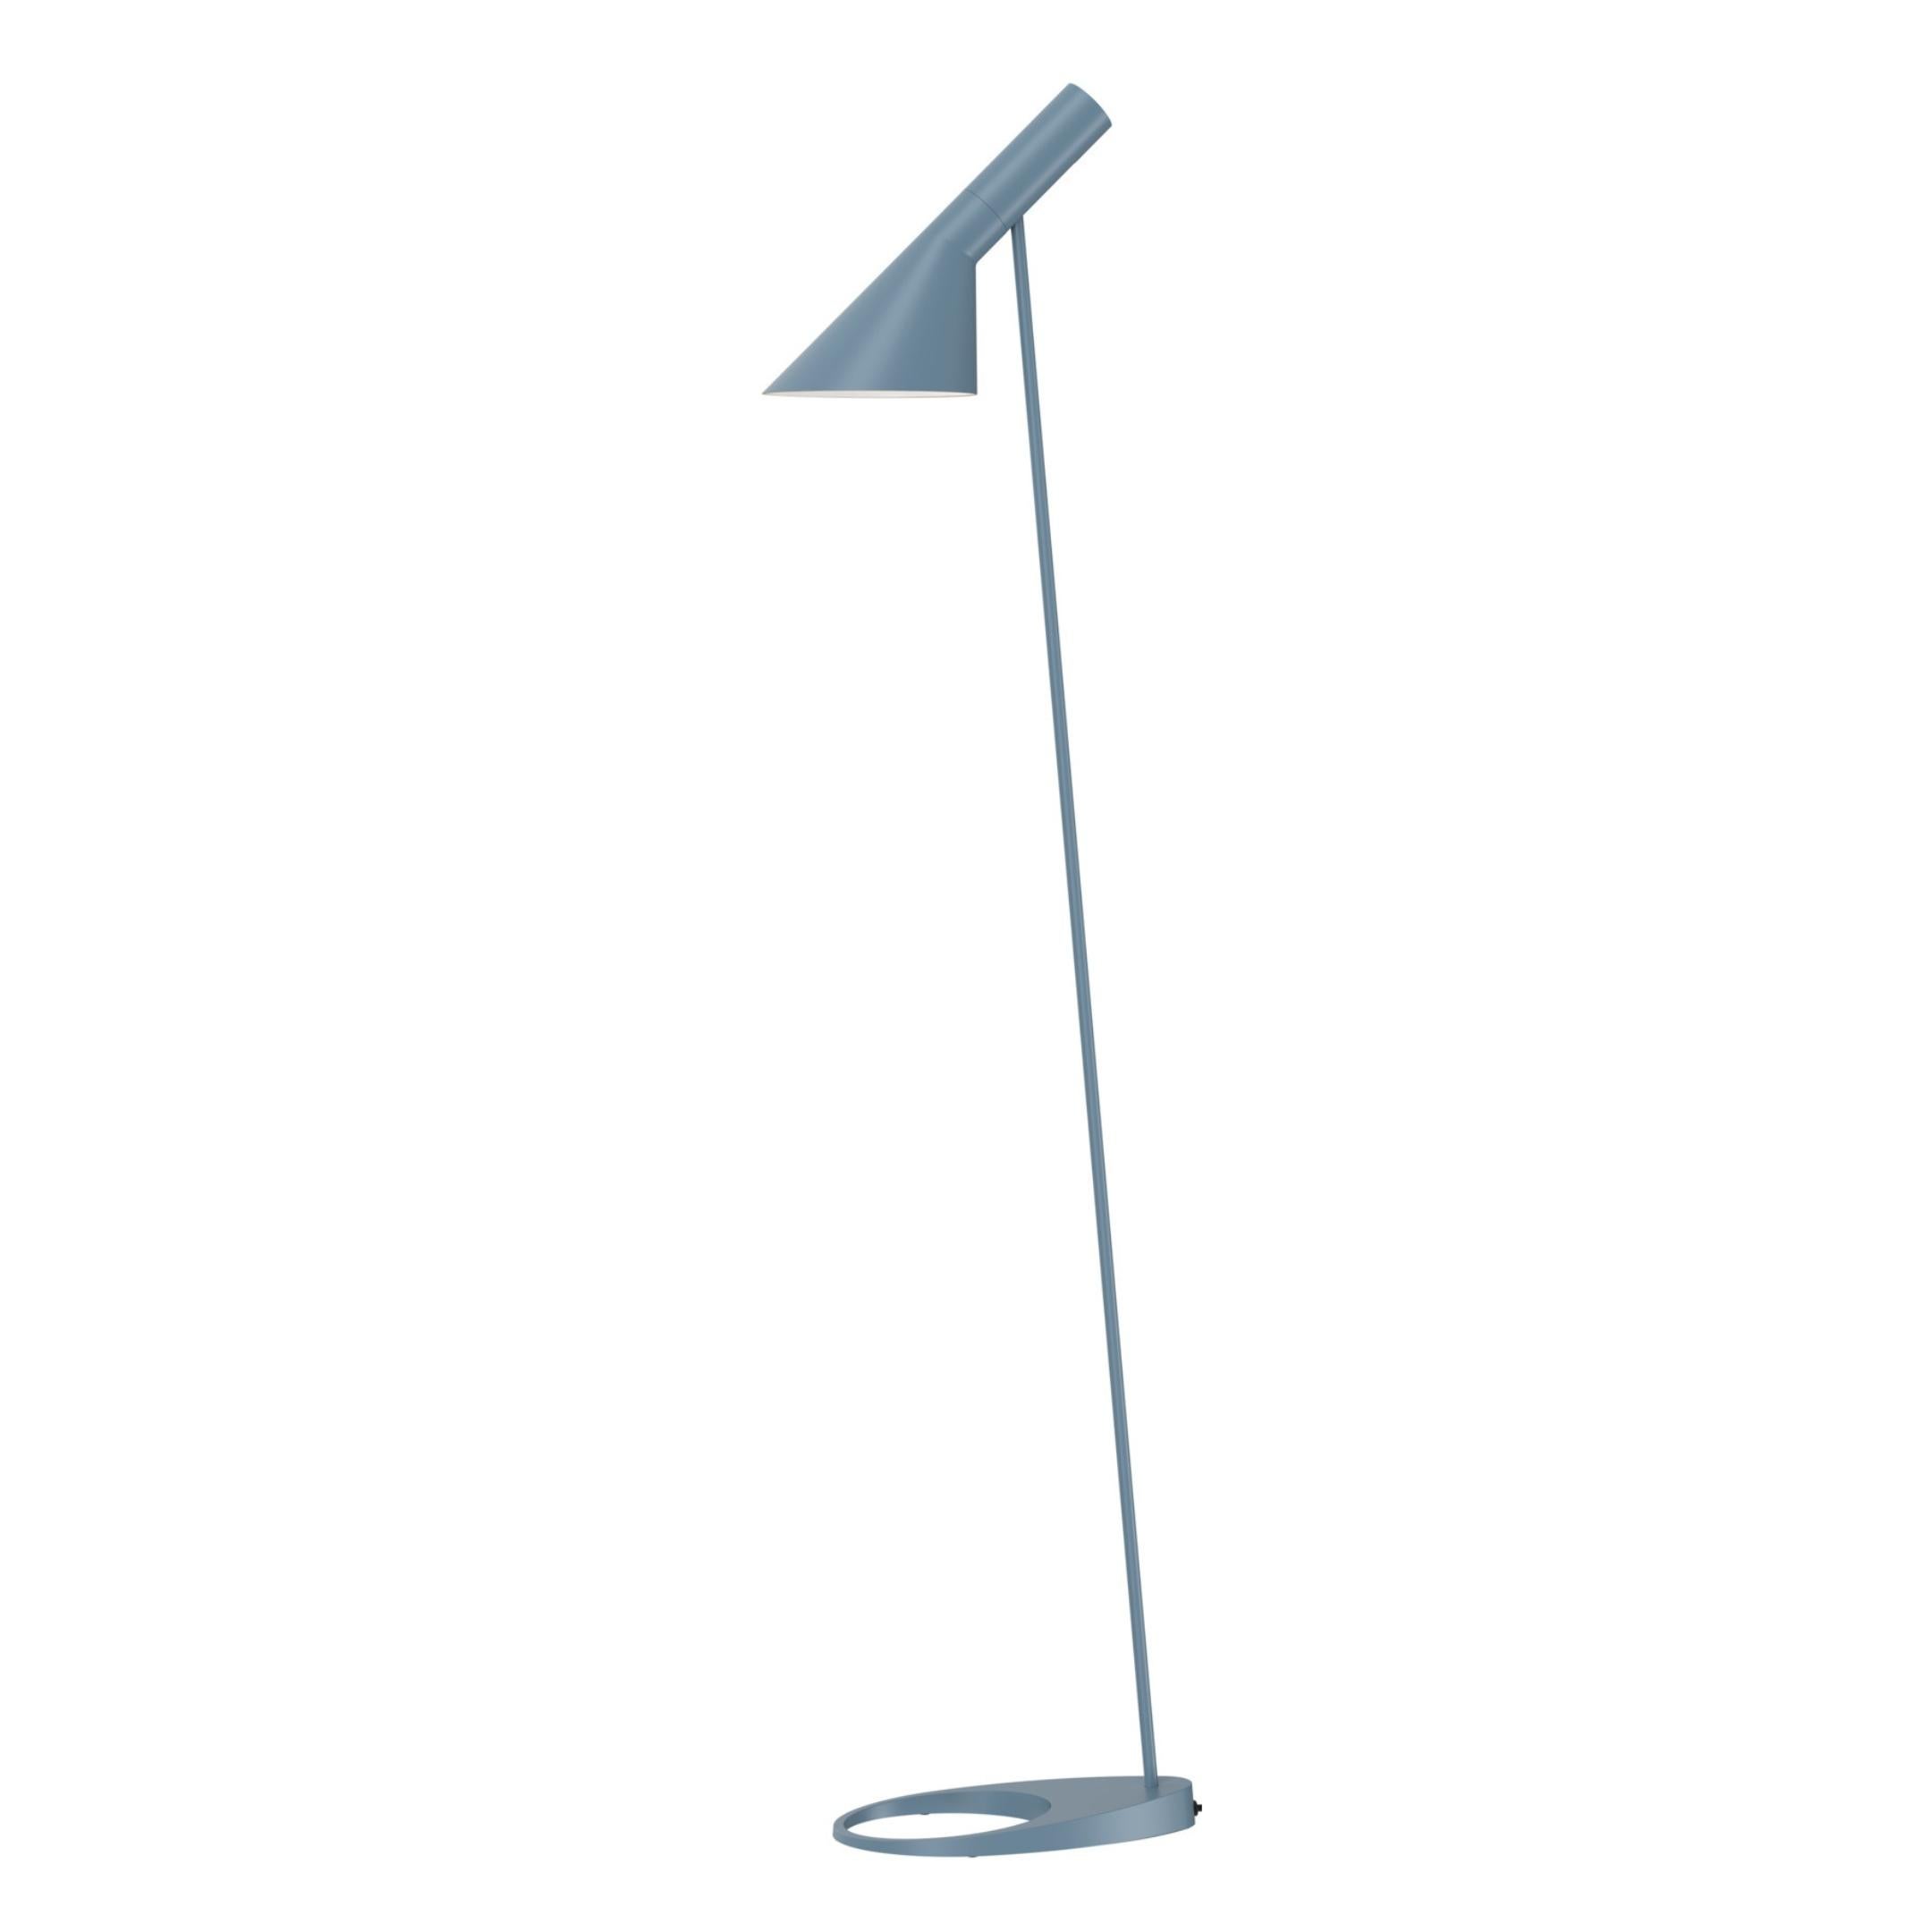 Arne Jacobsen AJ Floor Lamp in Electric Orange for Louis Poulsen For Sale 6